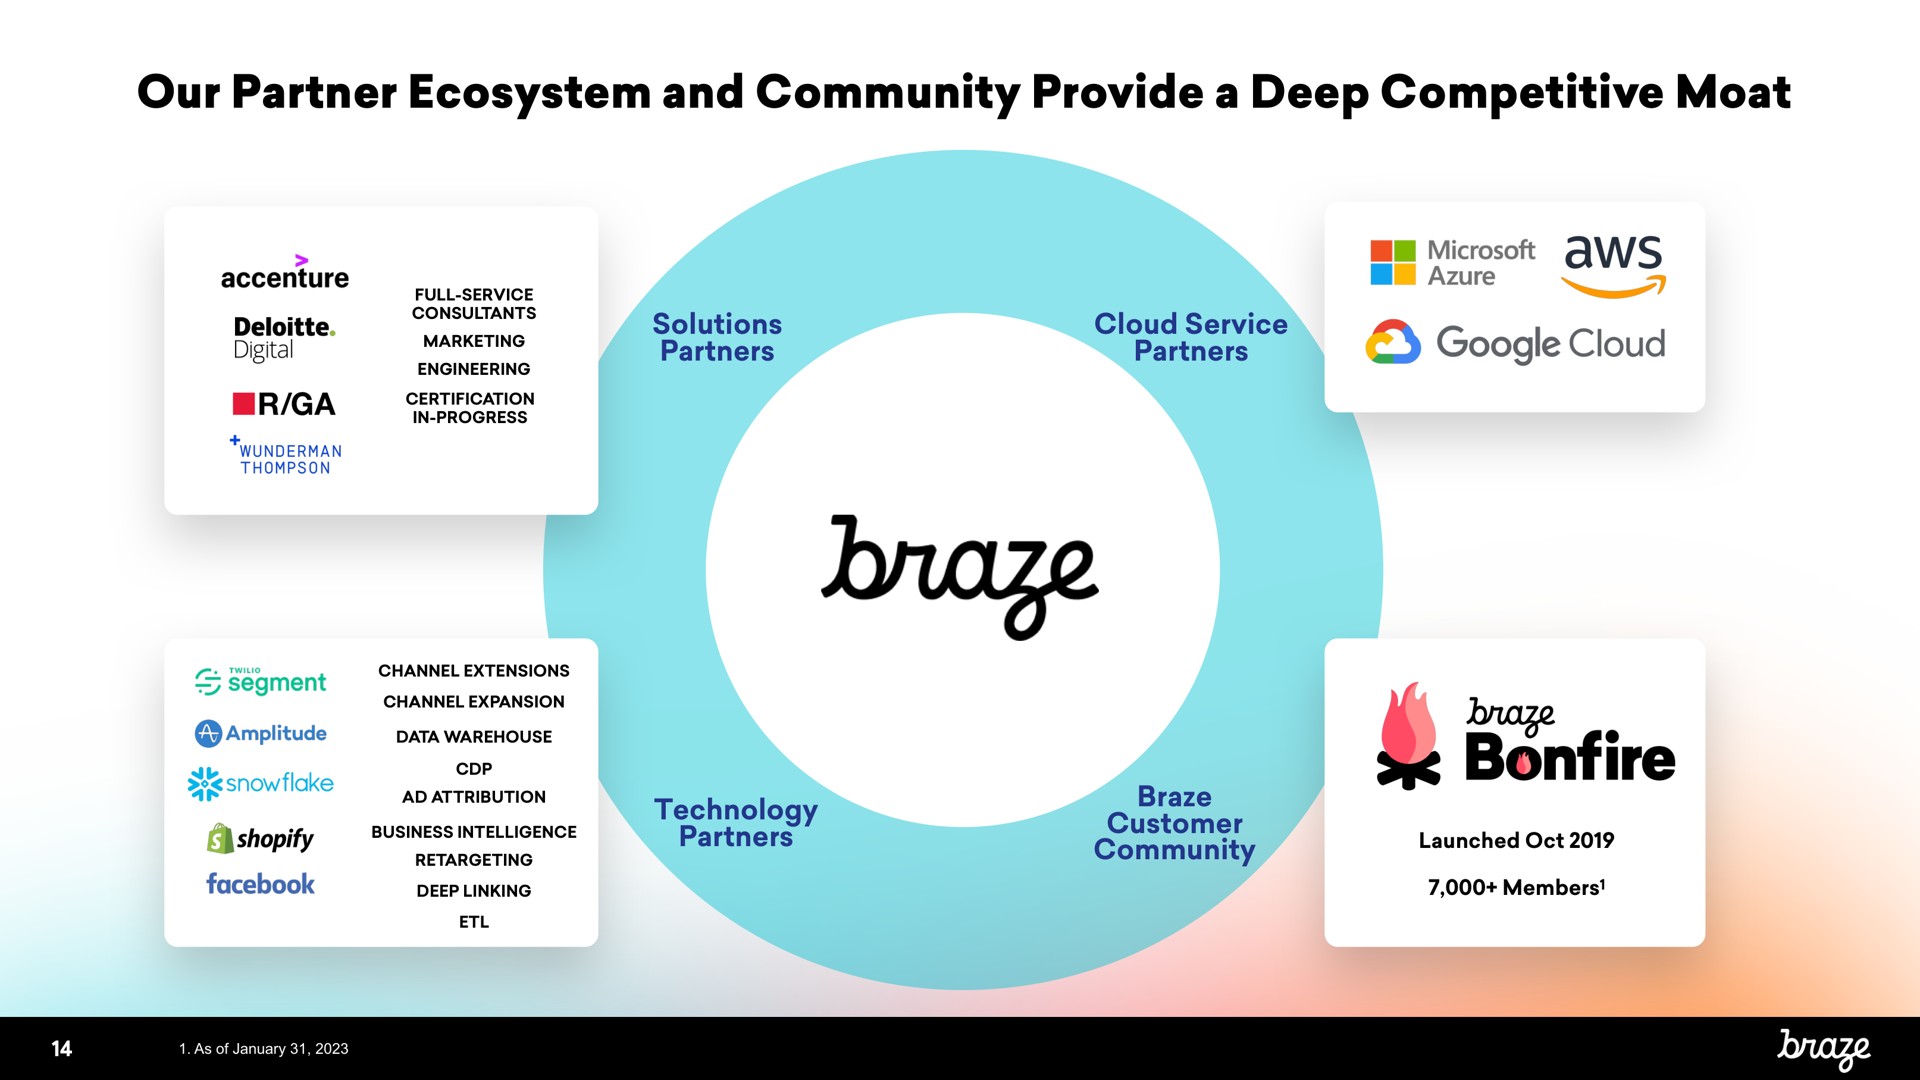 our partner ecosystem and community provide a deep competitive moat bonfire | Braze